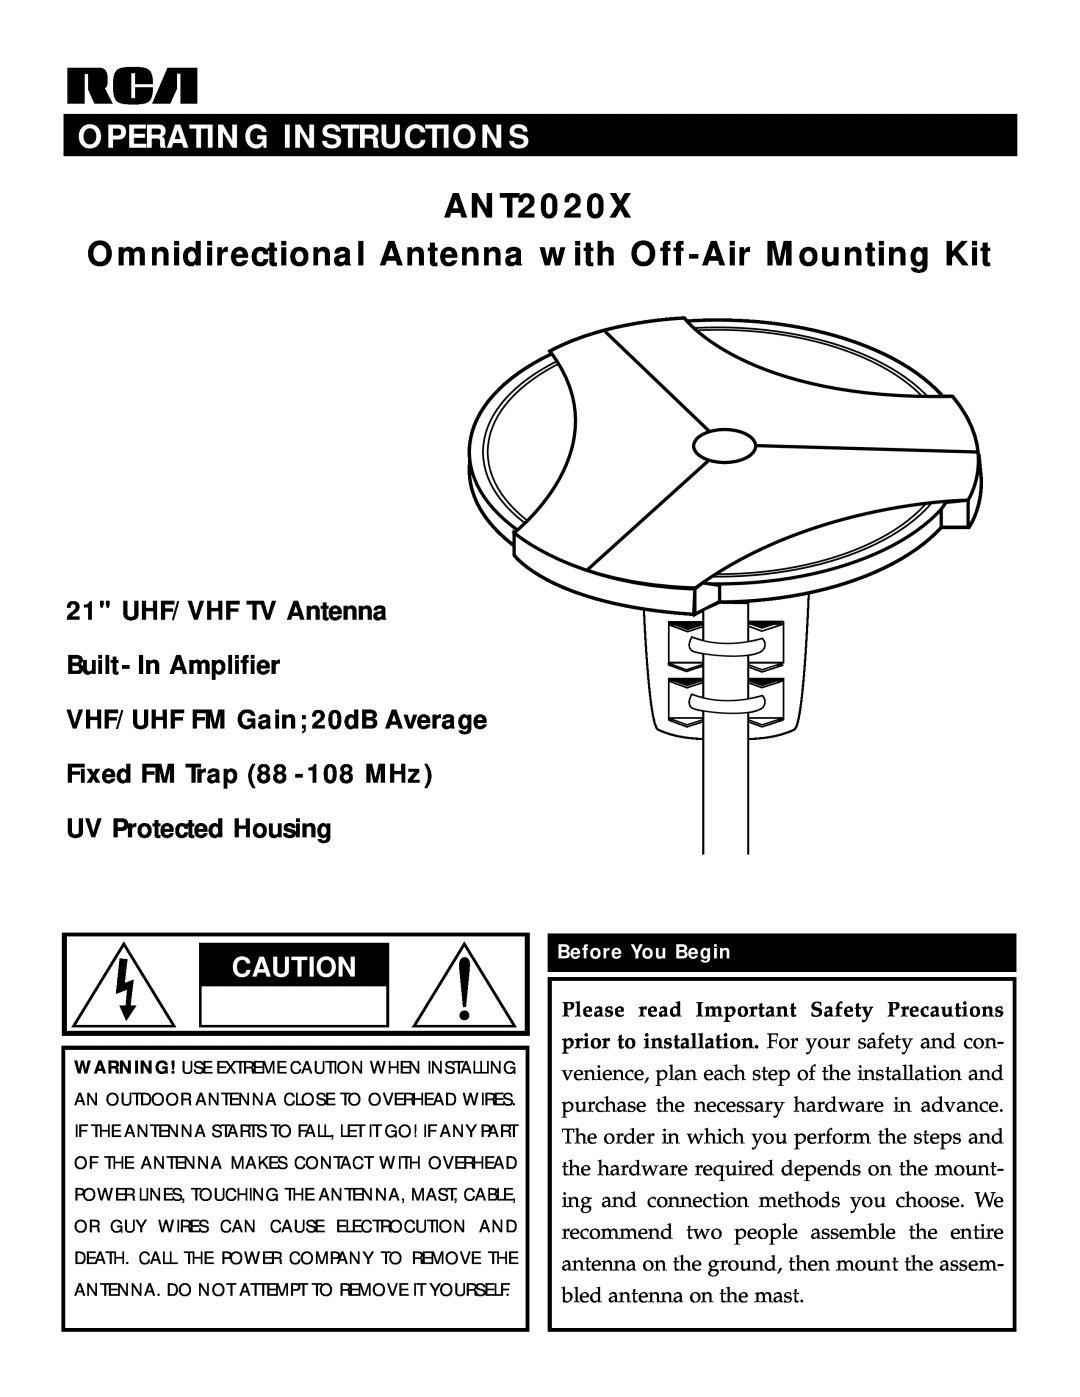 RCA ANT2020X manual Omnidirectional Antenna with Off-AirMounting Kit, Operating Instructions, VHF/UHF FM Gain 20dB Average 